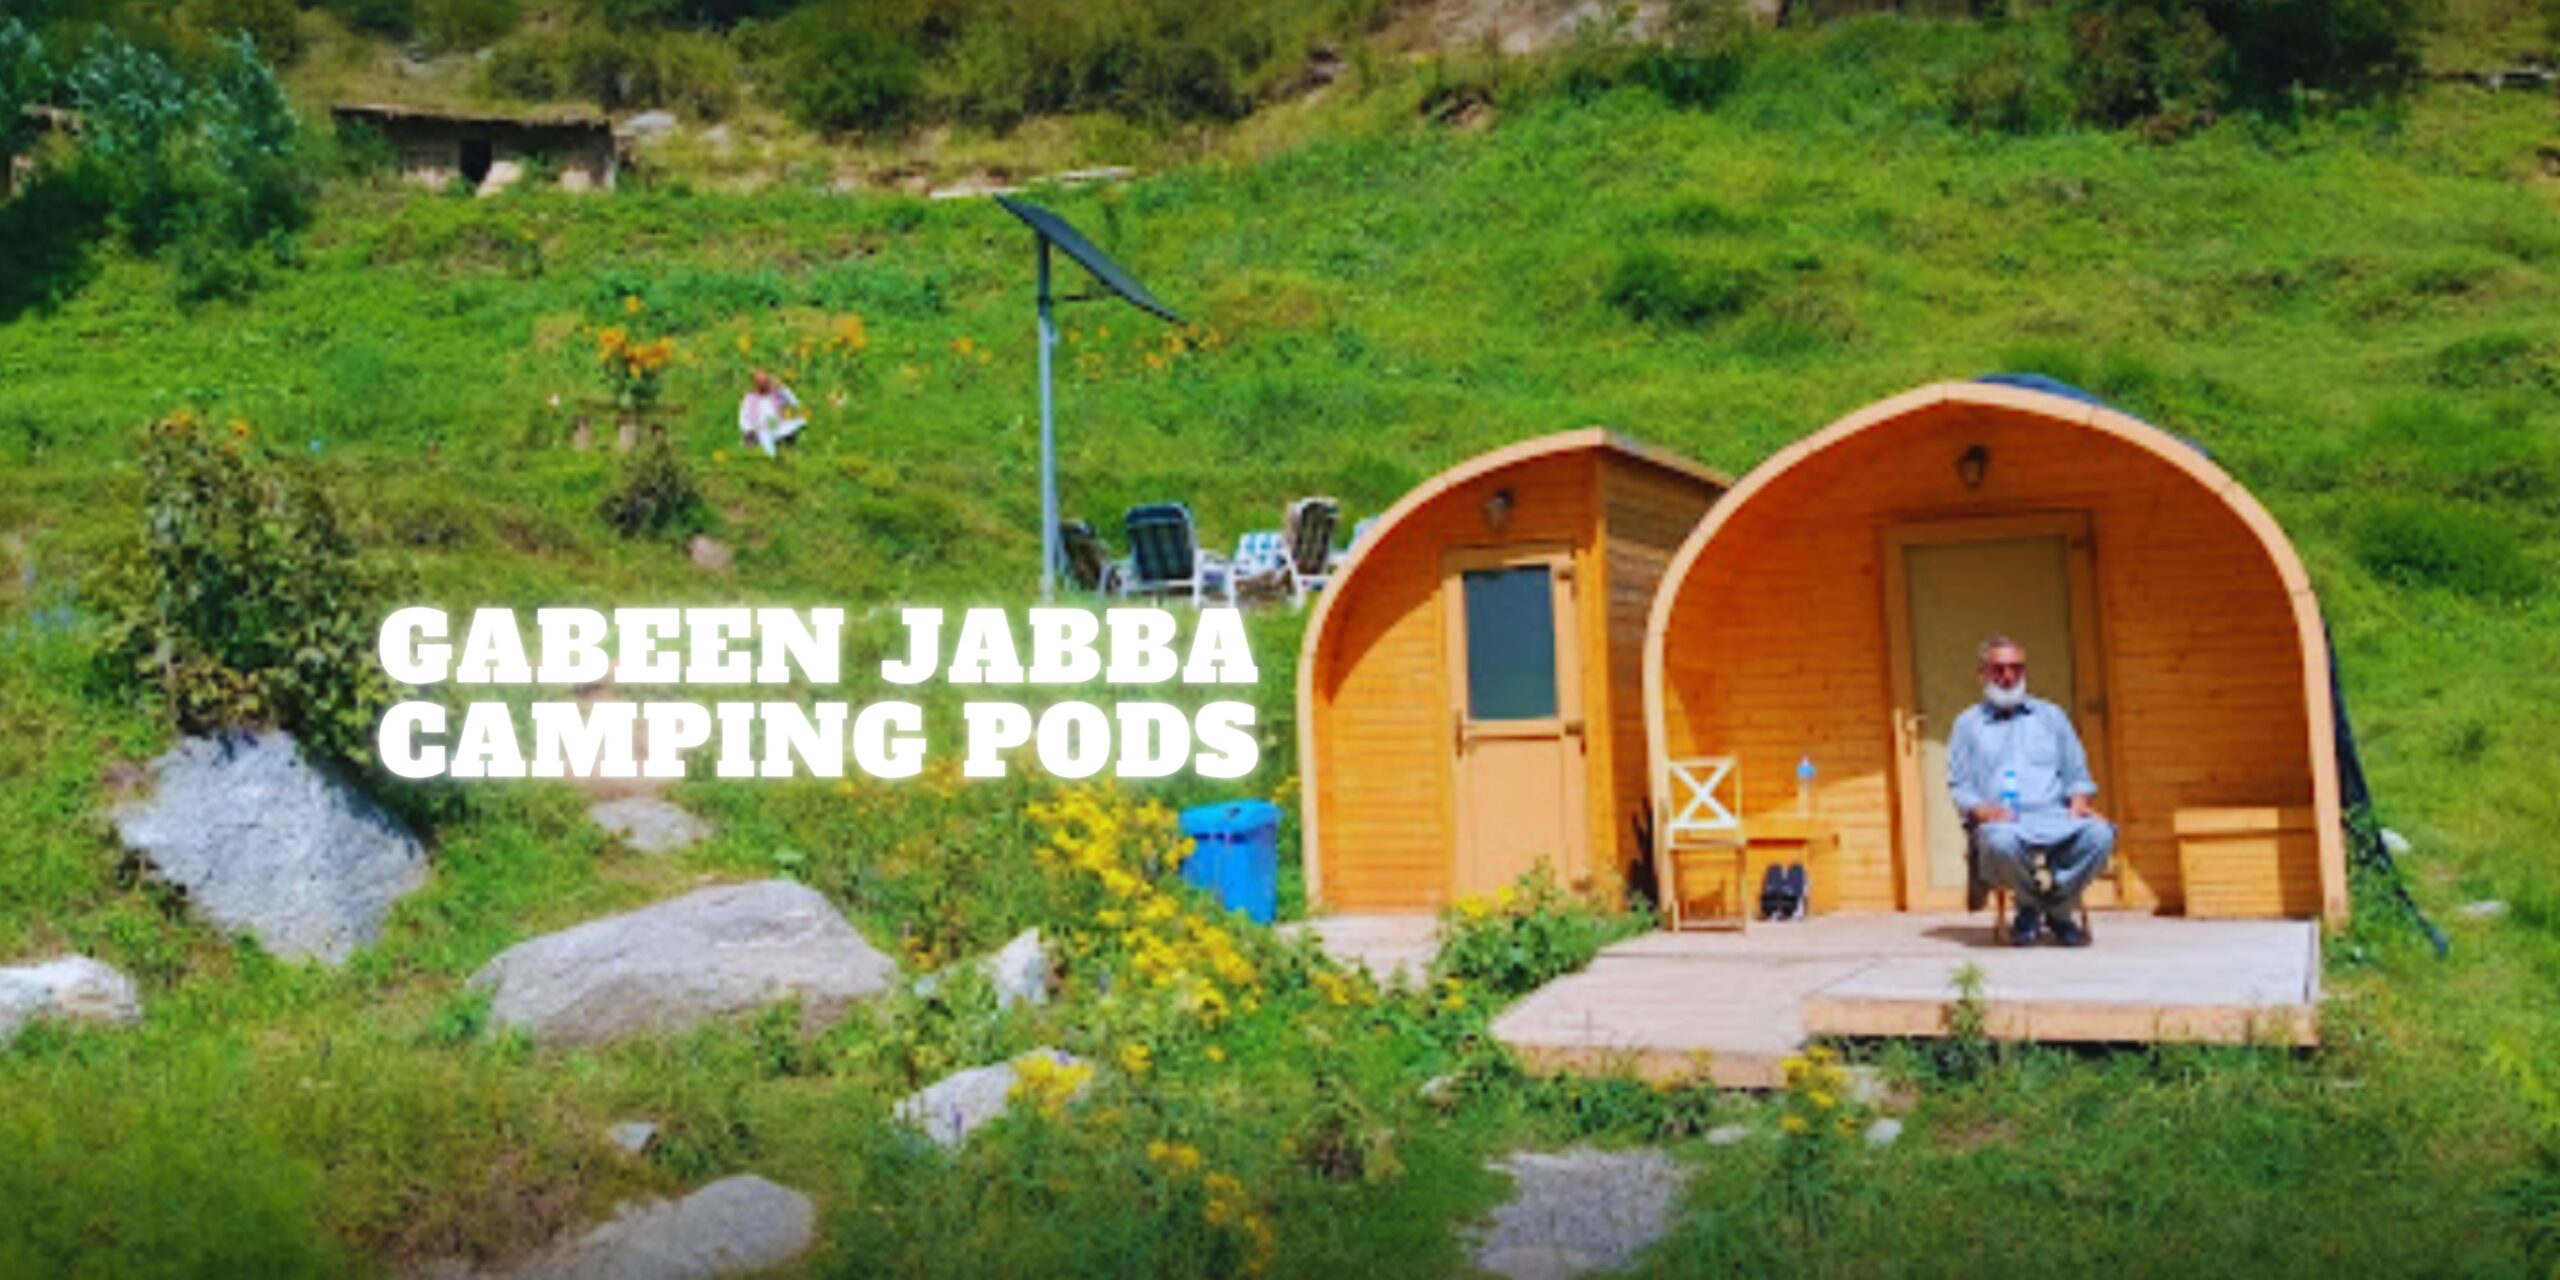 Gabeen Jabba Camping Pods SWAT